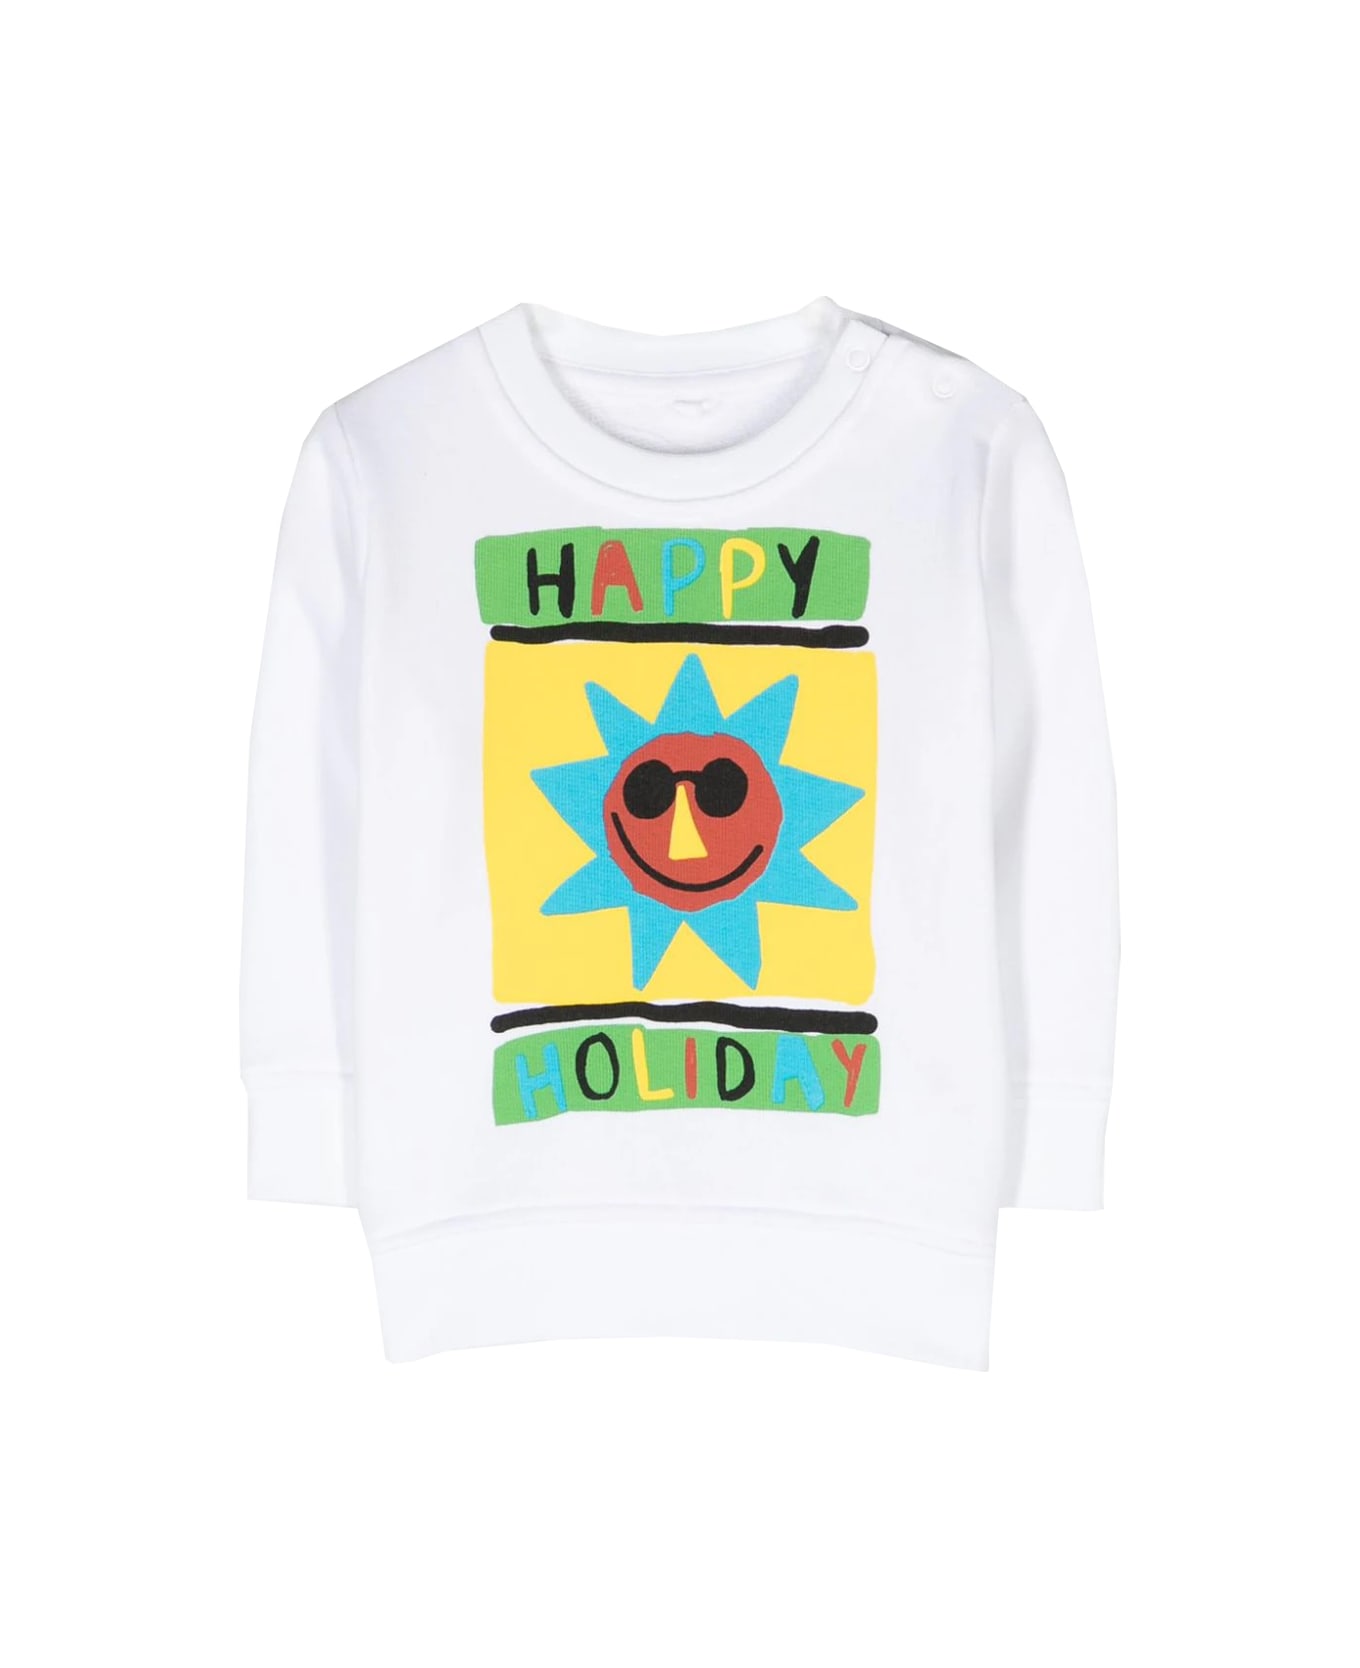 Stella McCartney Kids Cotton Sweatshirt - White ニットウェア＆スウェットシャツ